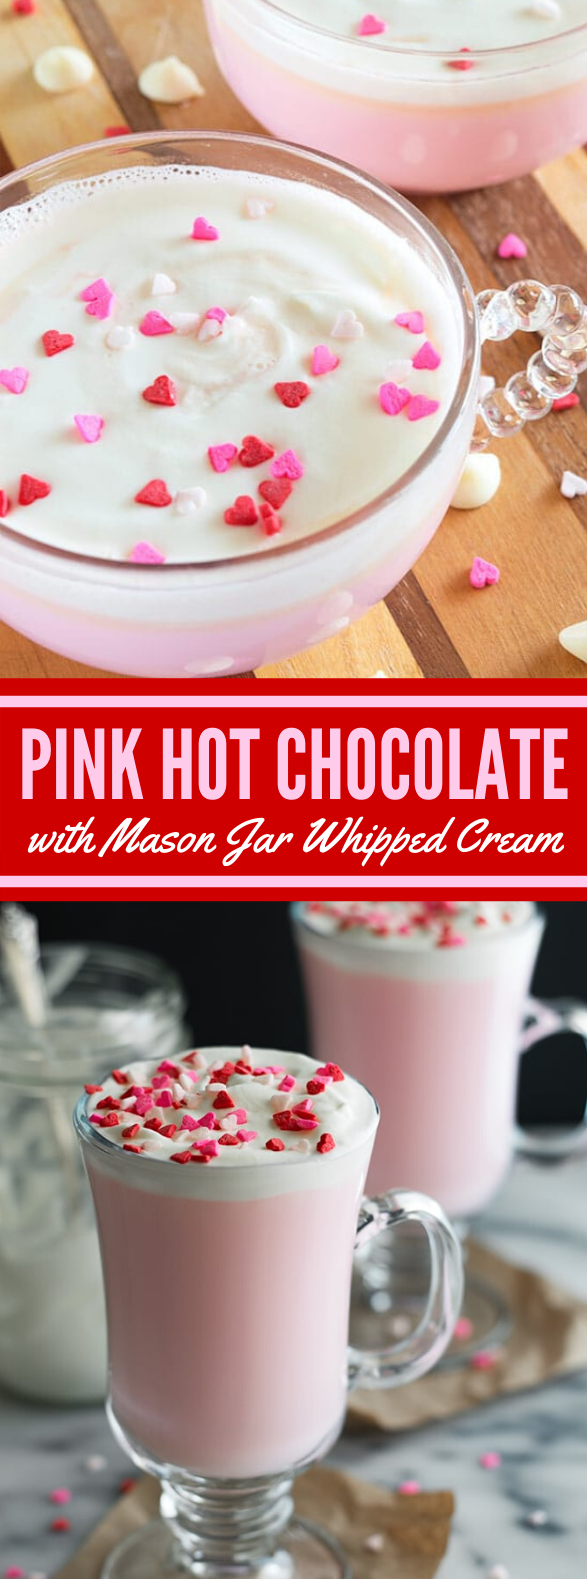 Pink Hot Chocolate with Mason Jar Whipped Cream #drinks #homemade